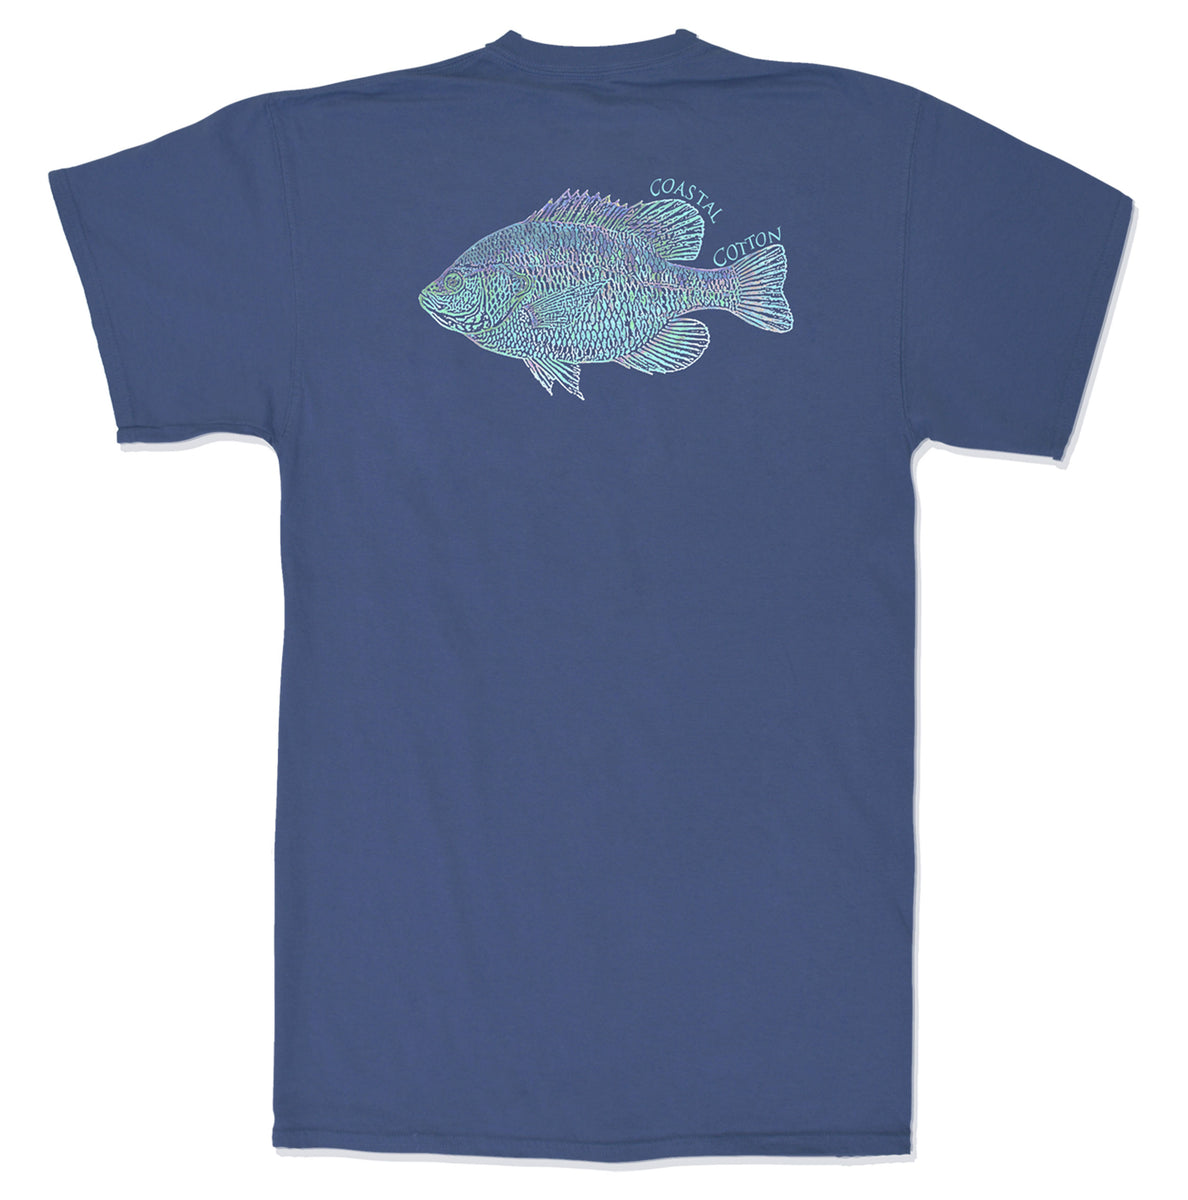 Realtree, Men's Short Sleeve Fishing Guide Shirt, Blue Grotto